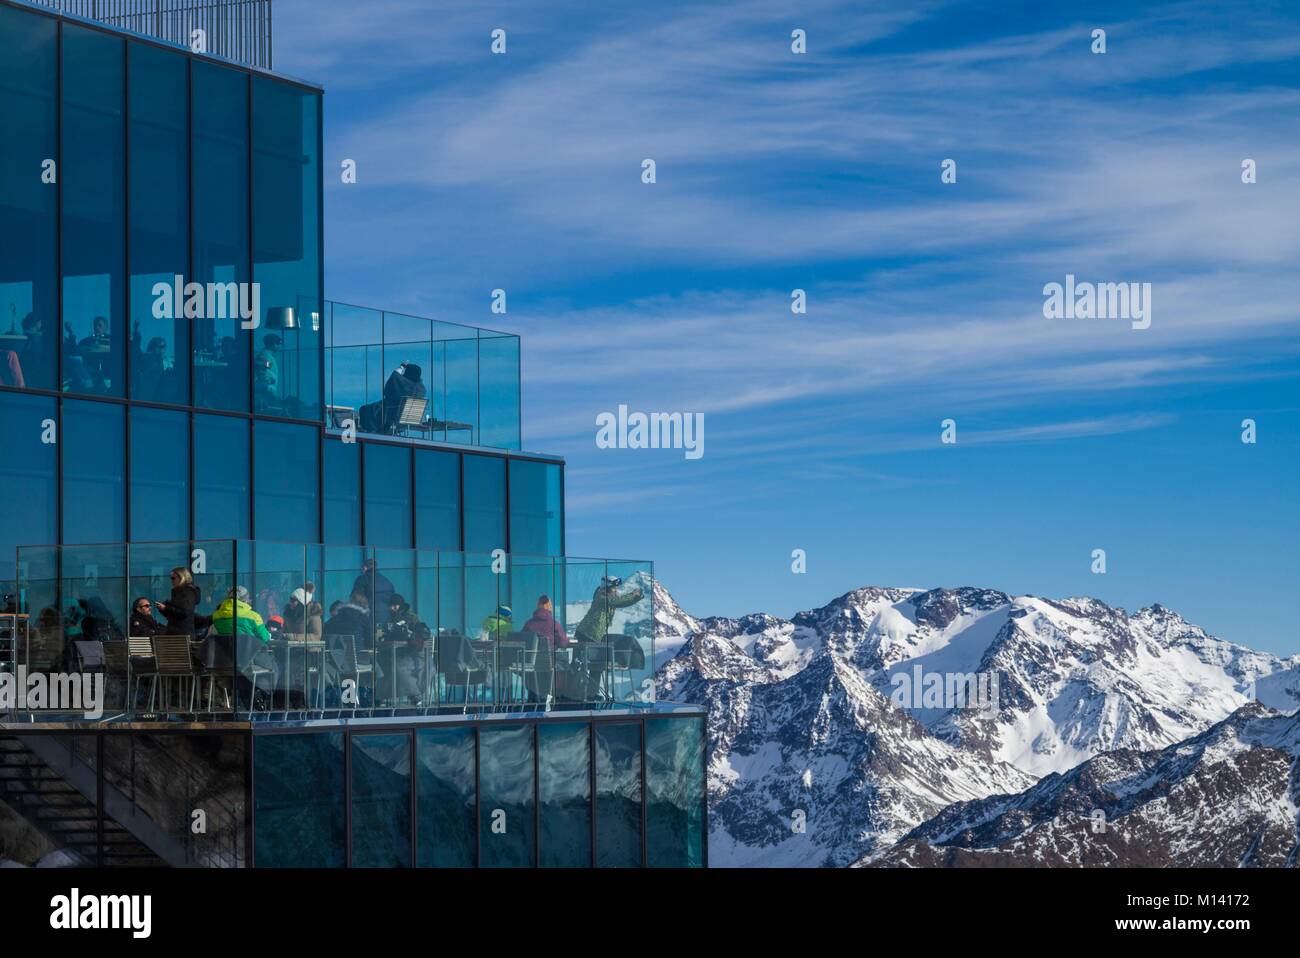 Austria, Tirol, Otztal, Solden, esquí de montaña, Gaislachkogl Gaislachkogl cumbre, altitud 3058 metros de hielo, restaurante gourmet Q Foto de stock